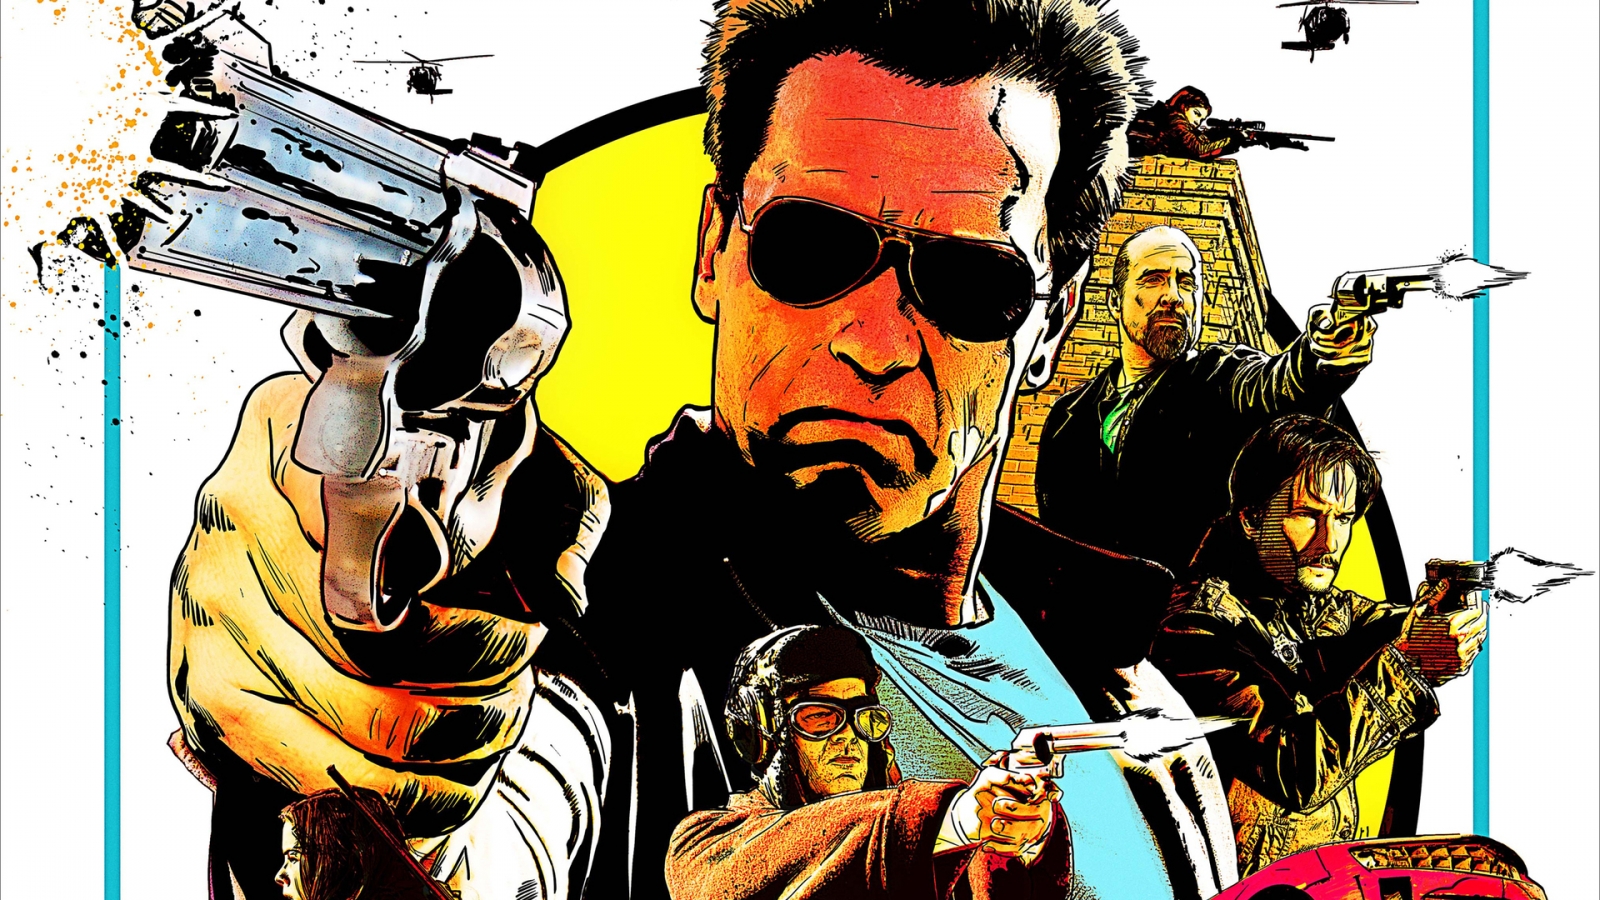 The Last Stand Arnold Schwarzenegger for 1600 x 900 HDTV resolution